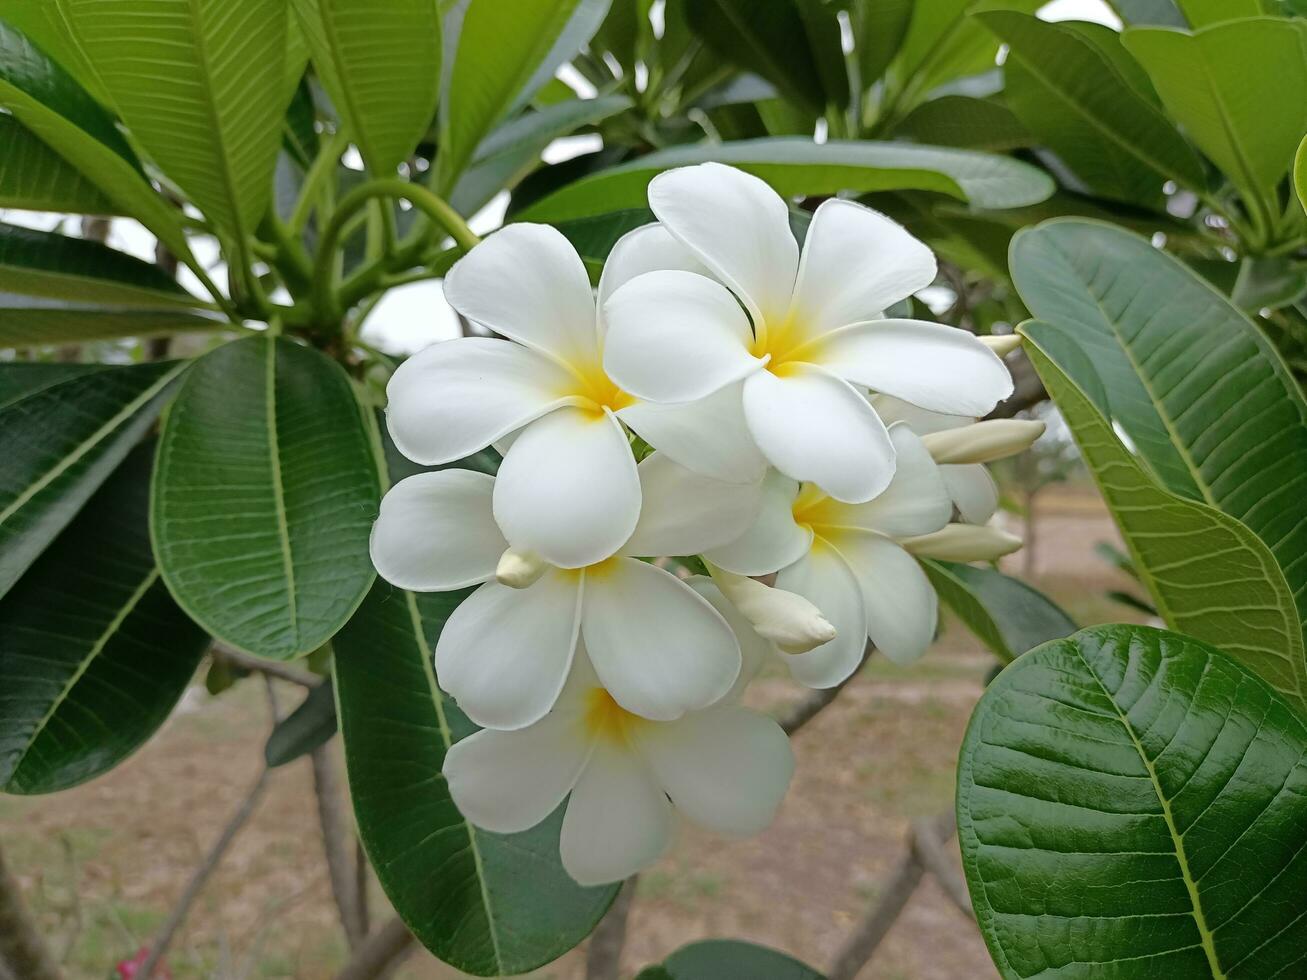 foto de flores brancas de frangipani